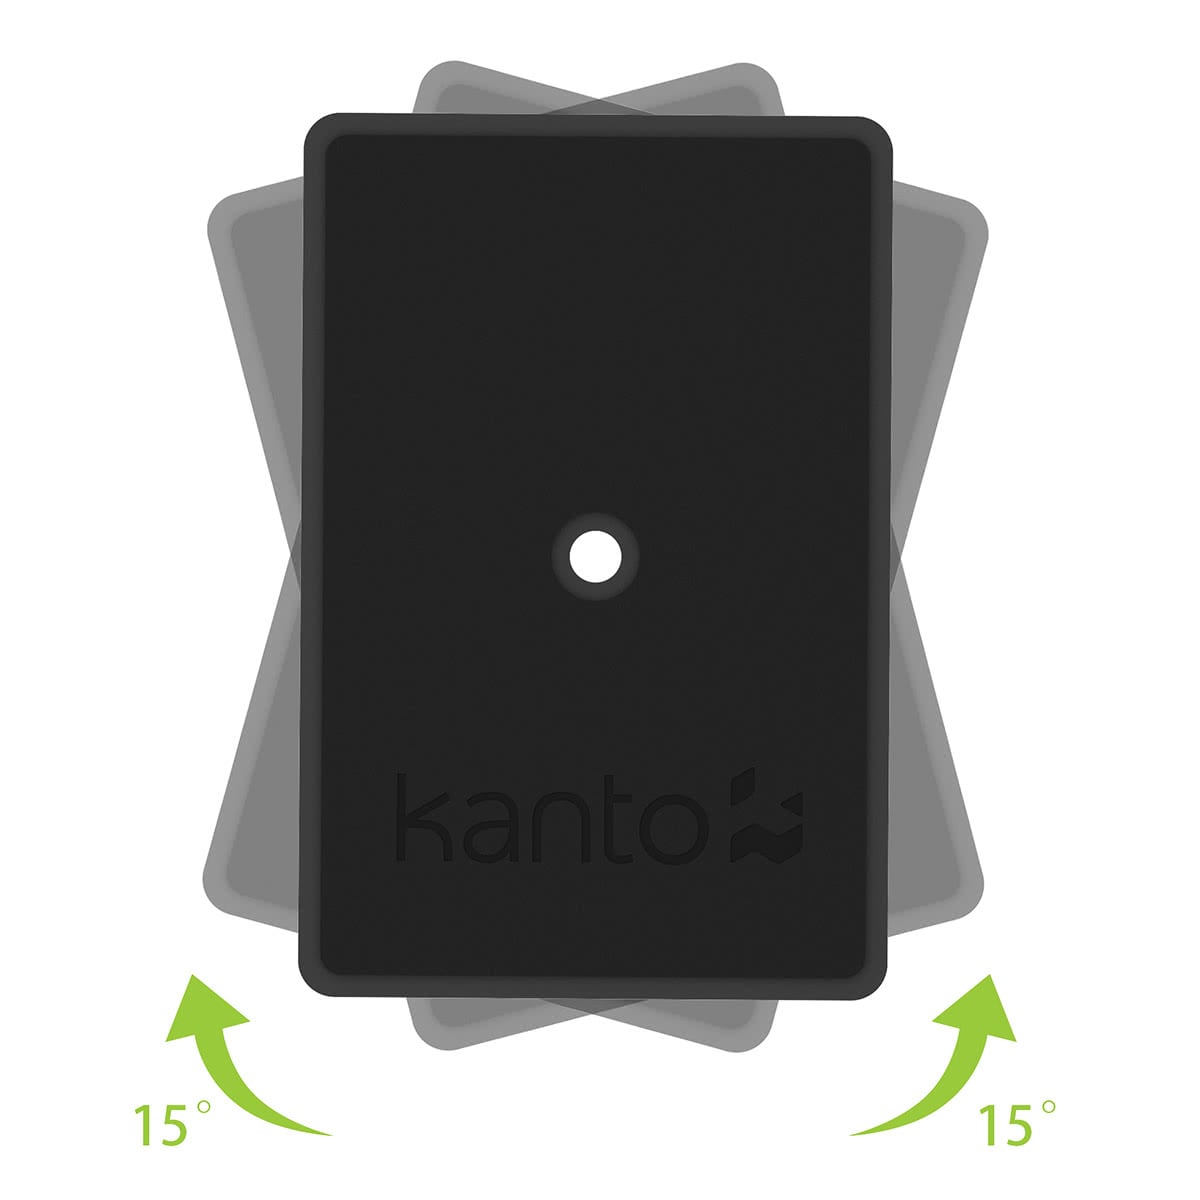 Kanto YU6 Powered Bookshelf Speakers with Bluetooth (Walnut) with SP9 Desktop Stands (Black)